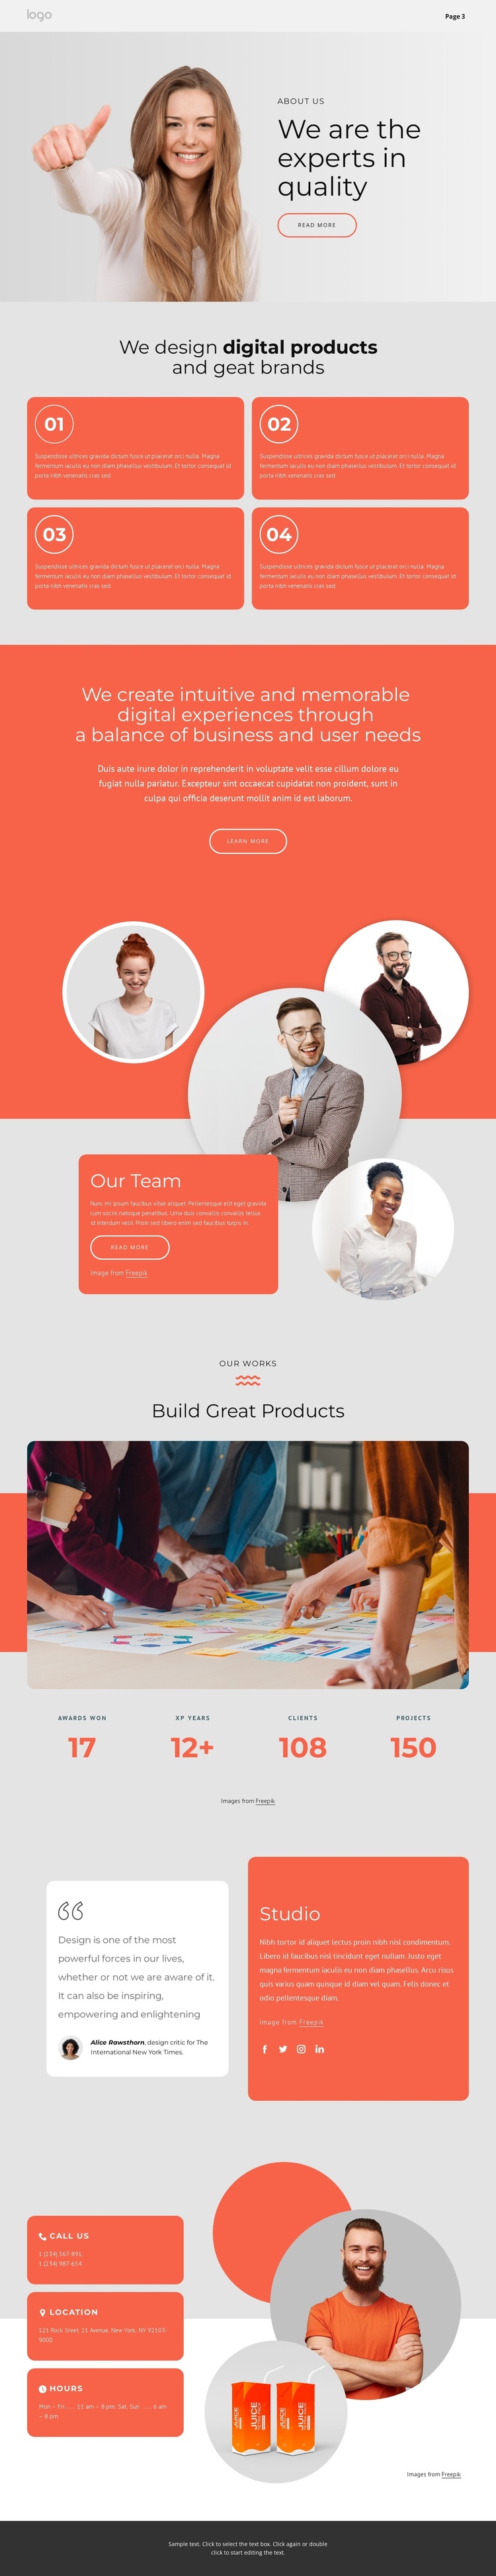 We design great brands Website Builder Software